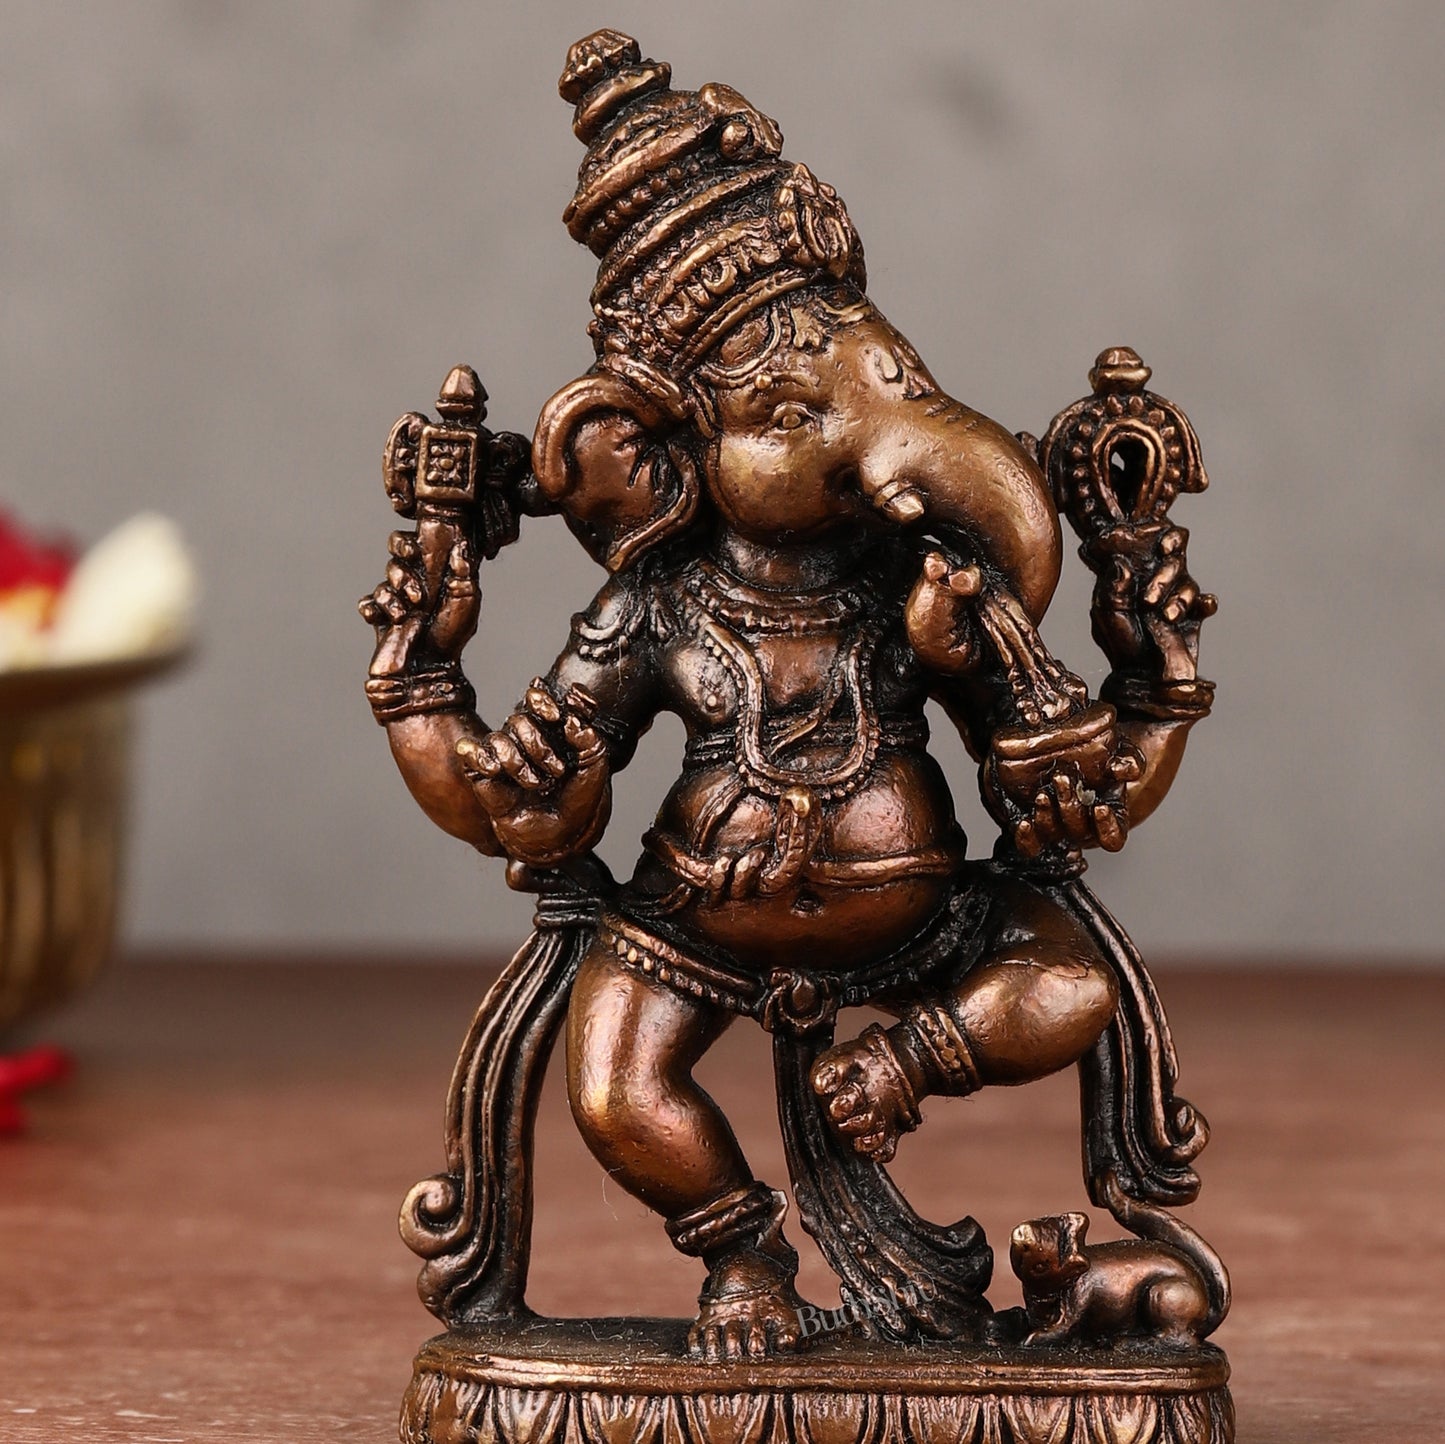 Pure Copper Dancing Vinayaka idol - 3-inch